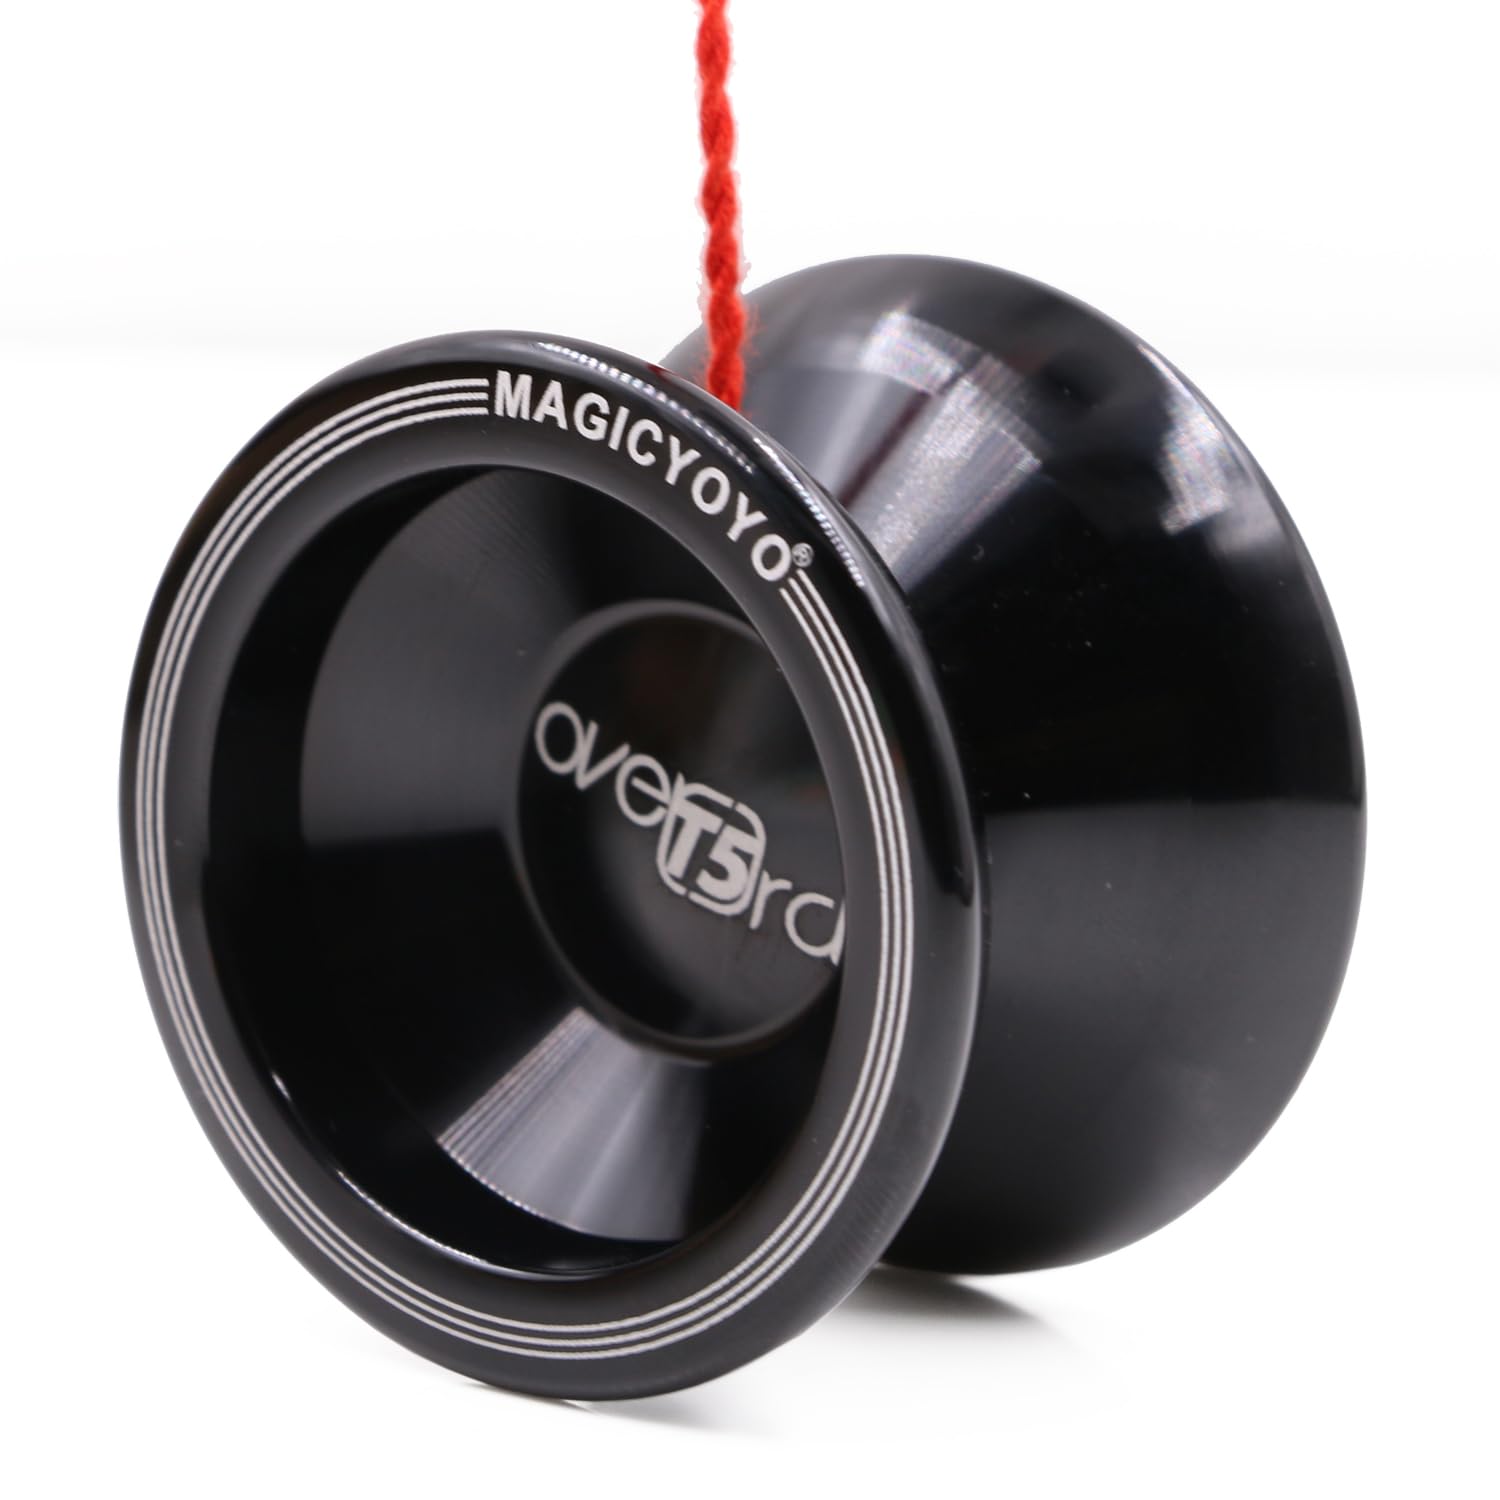 MAGICYOYO Pro Yo-yo Responsive Yoyo T5, Metal Yo Yo for Kids Beginner, Replacement Unresponsive Yoyo Bearing for Advanced Yoyo Player